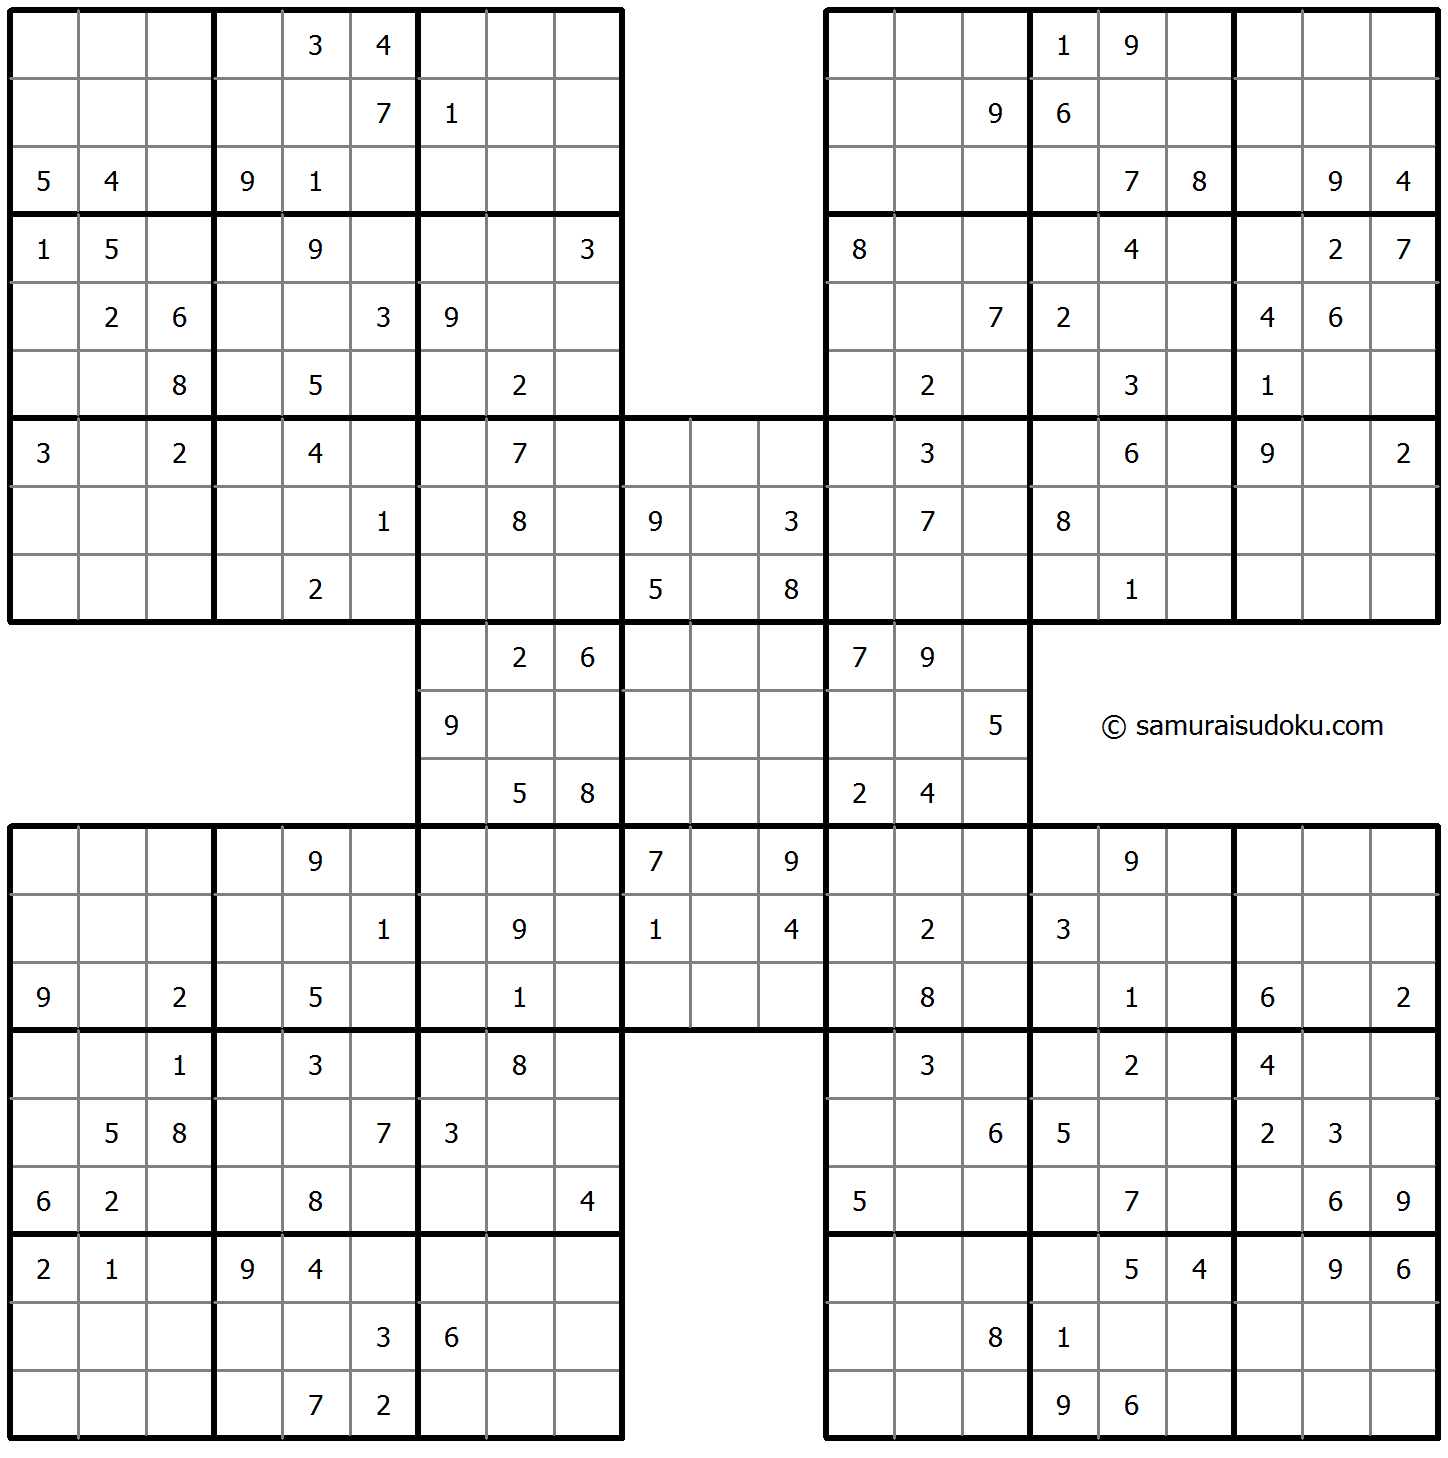 Samurai Sudoku 27-February-2022